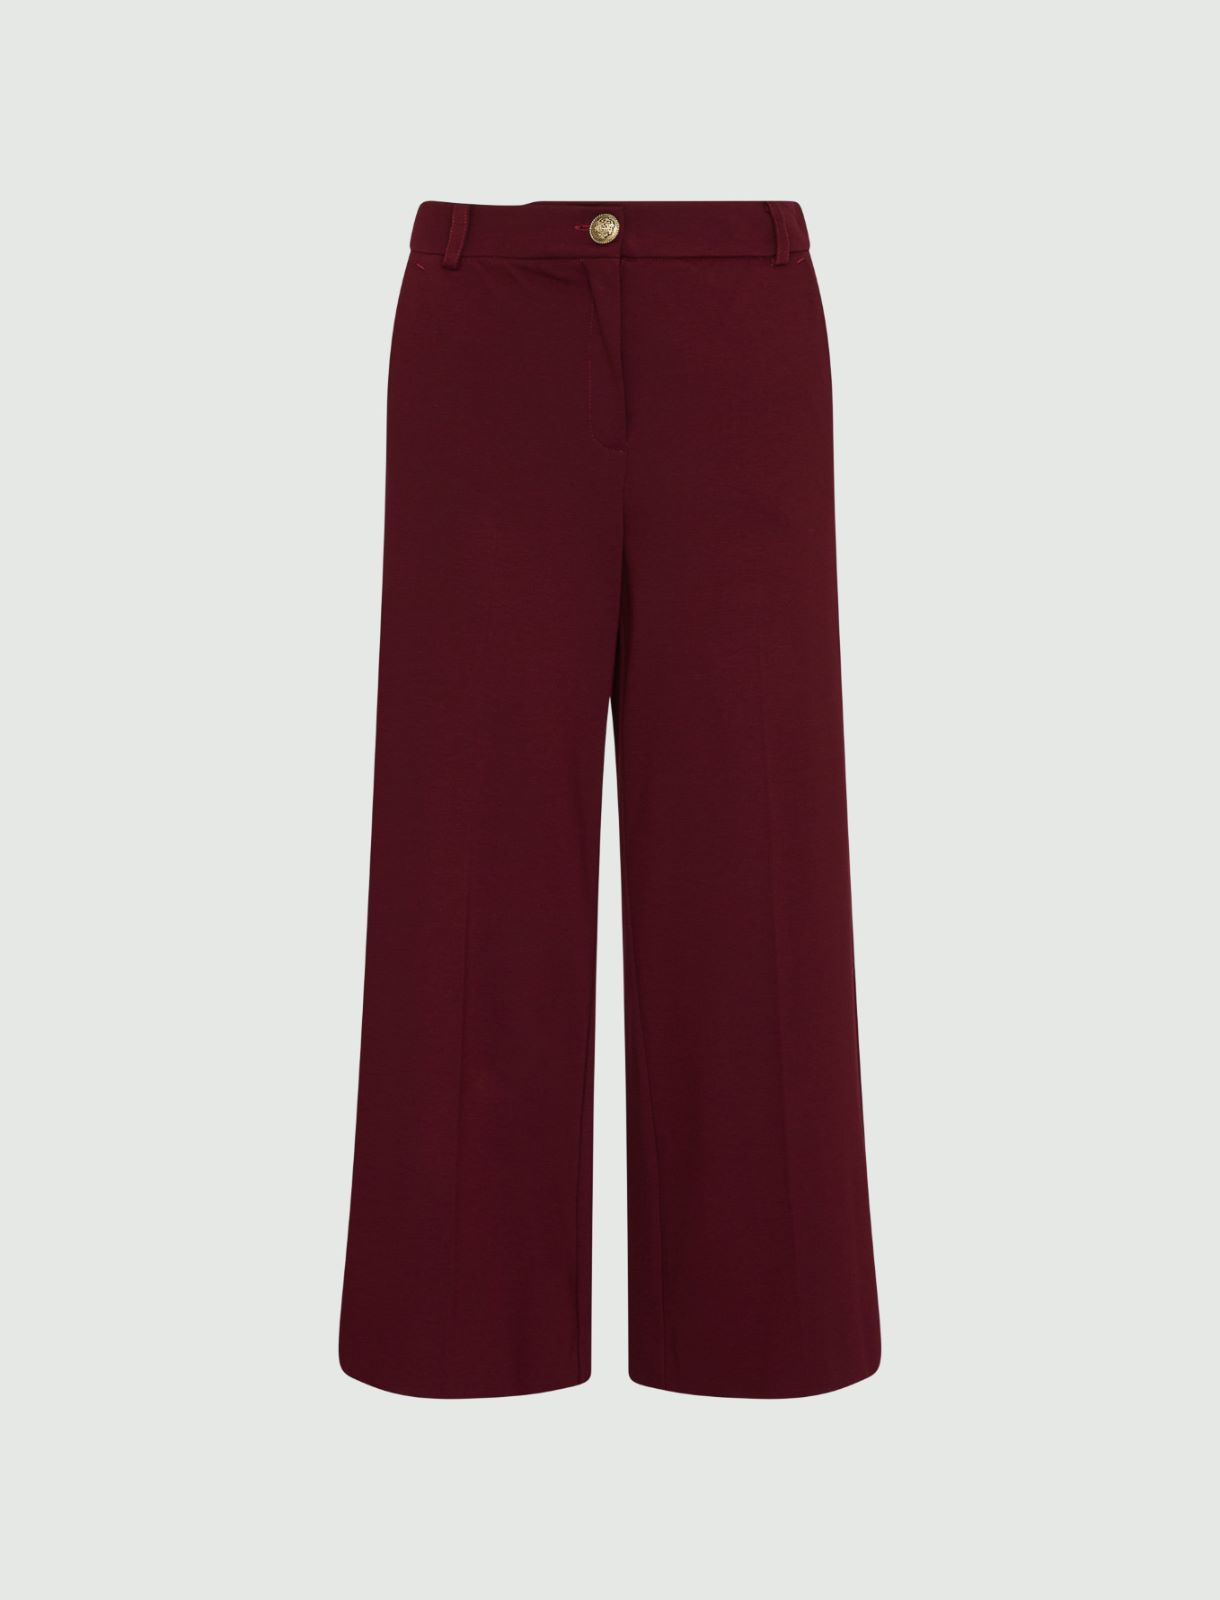 Pantaloni wide leg - Bordeaux - Marella - 2